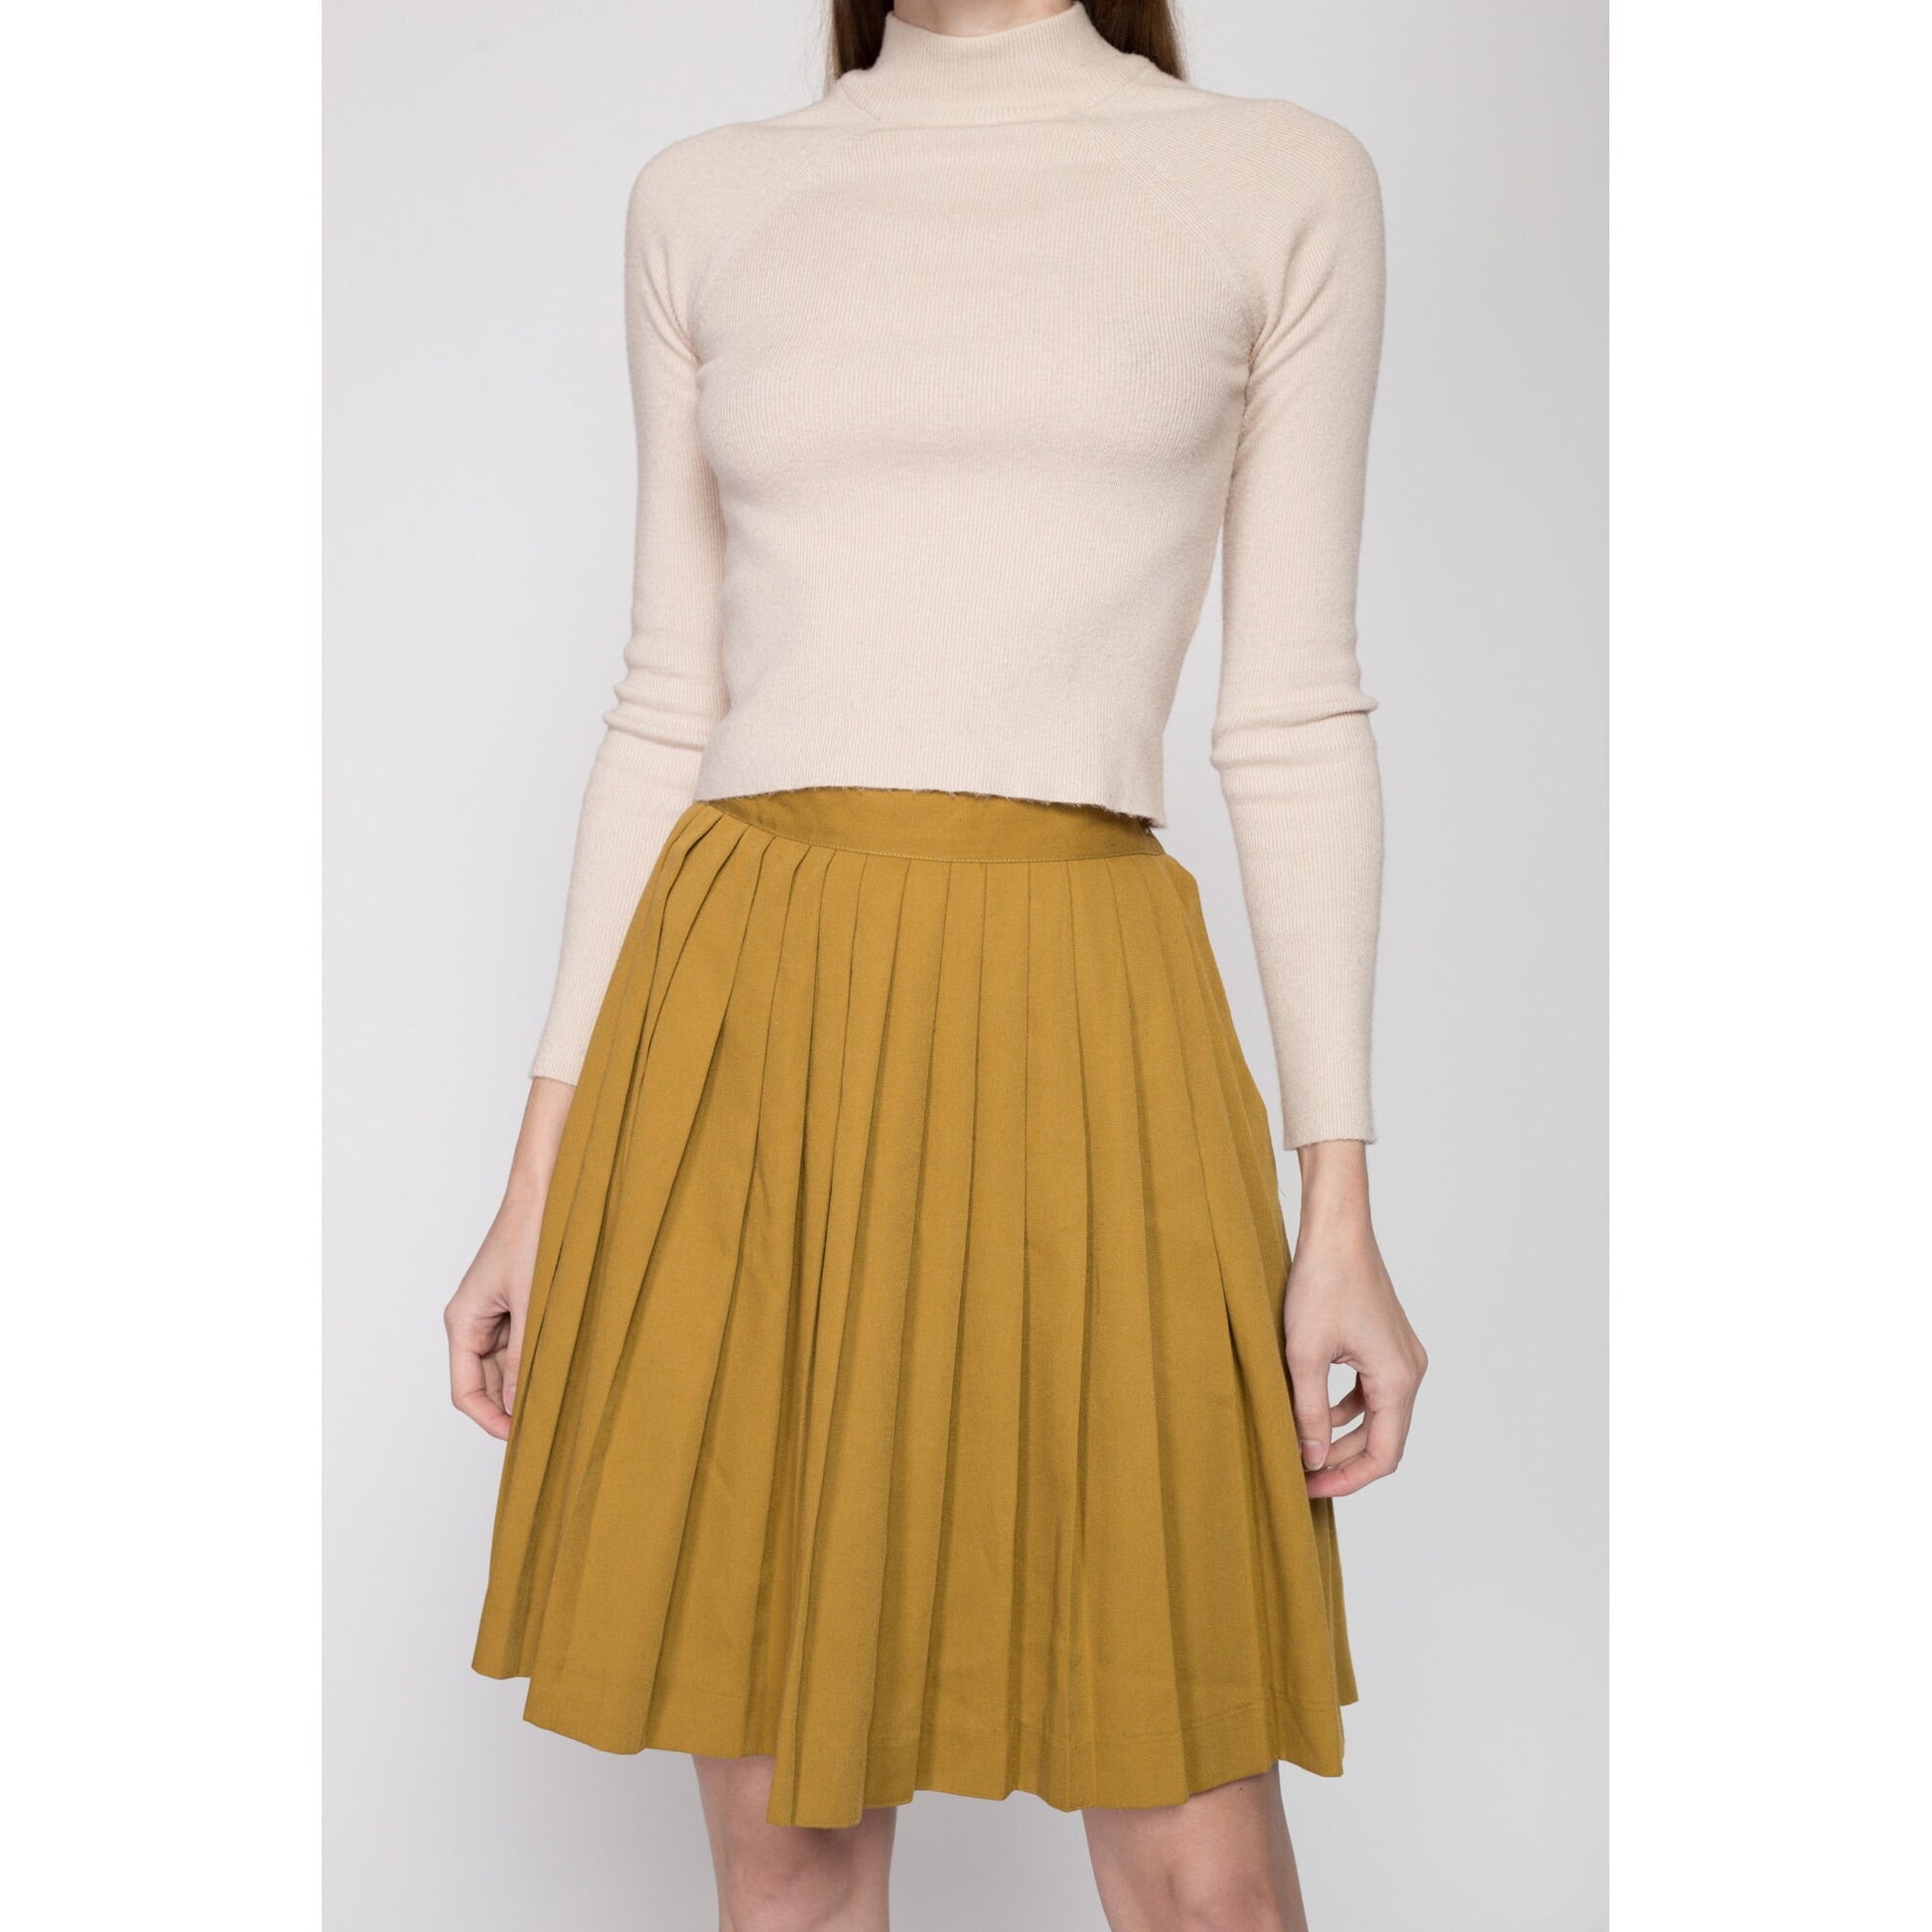 Small 80s Mustard Yellow Pleated Mini Skirt 25.5" | Vintage High Waisted Rayon Schoolgirl Skirt